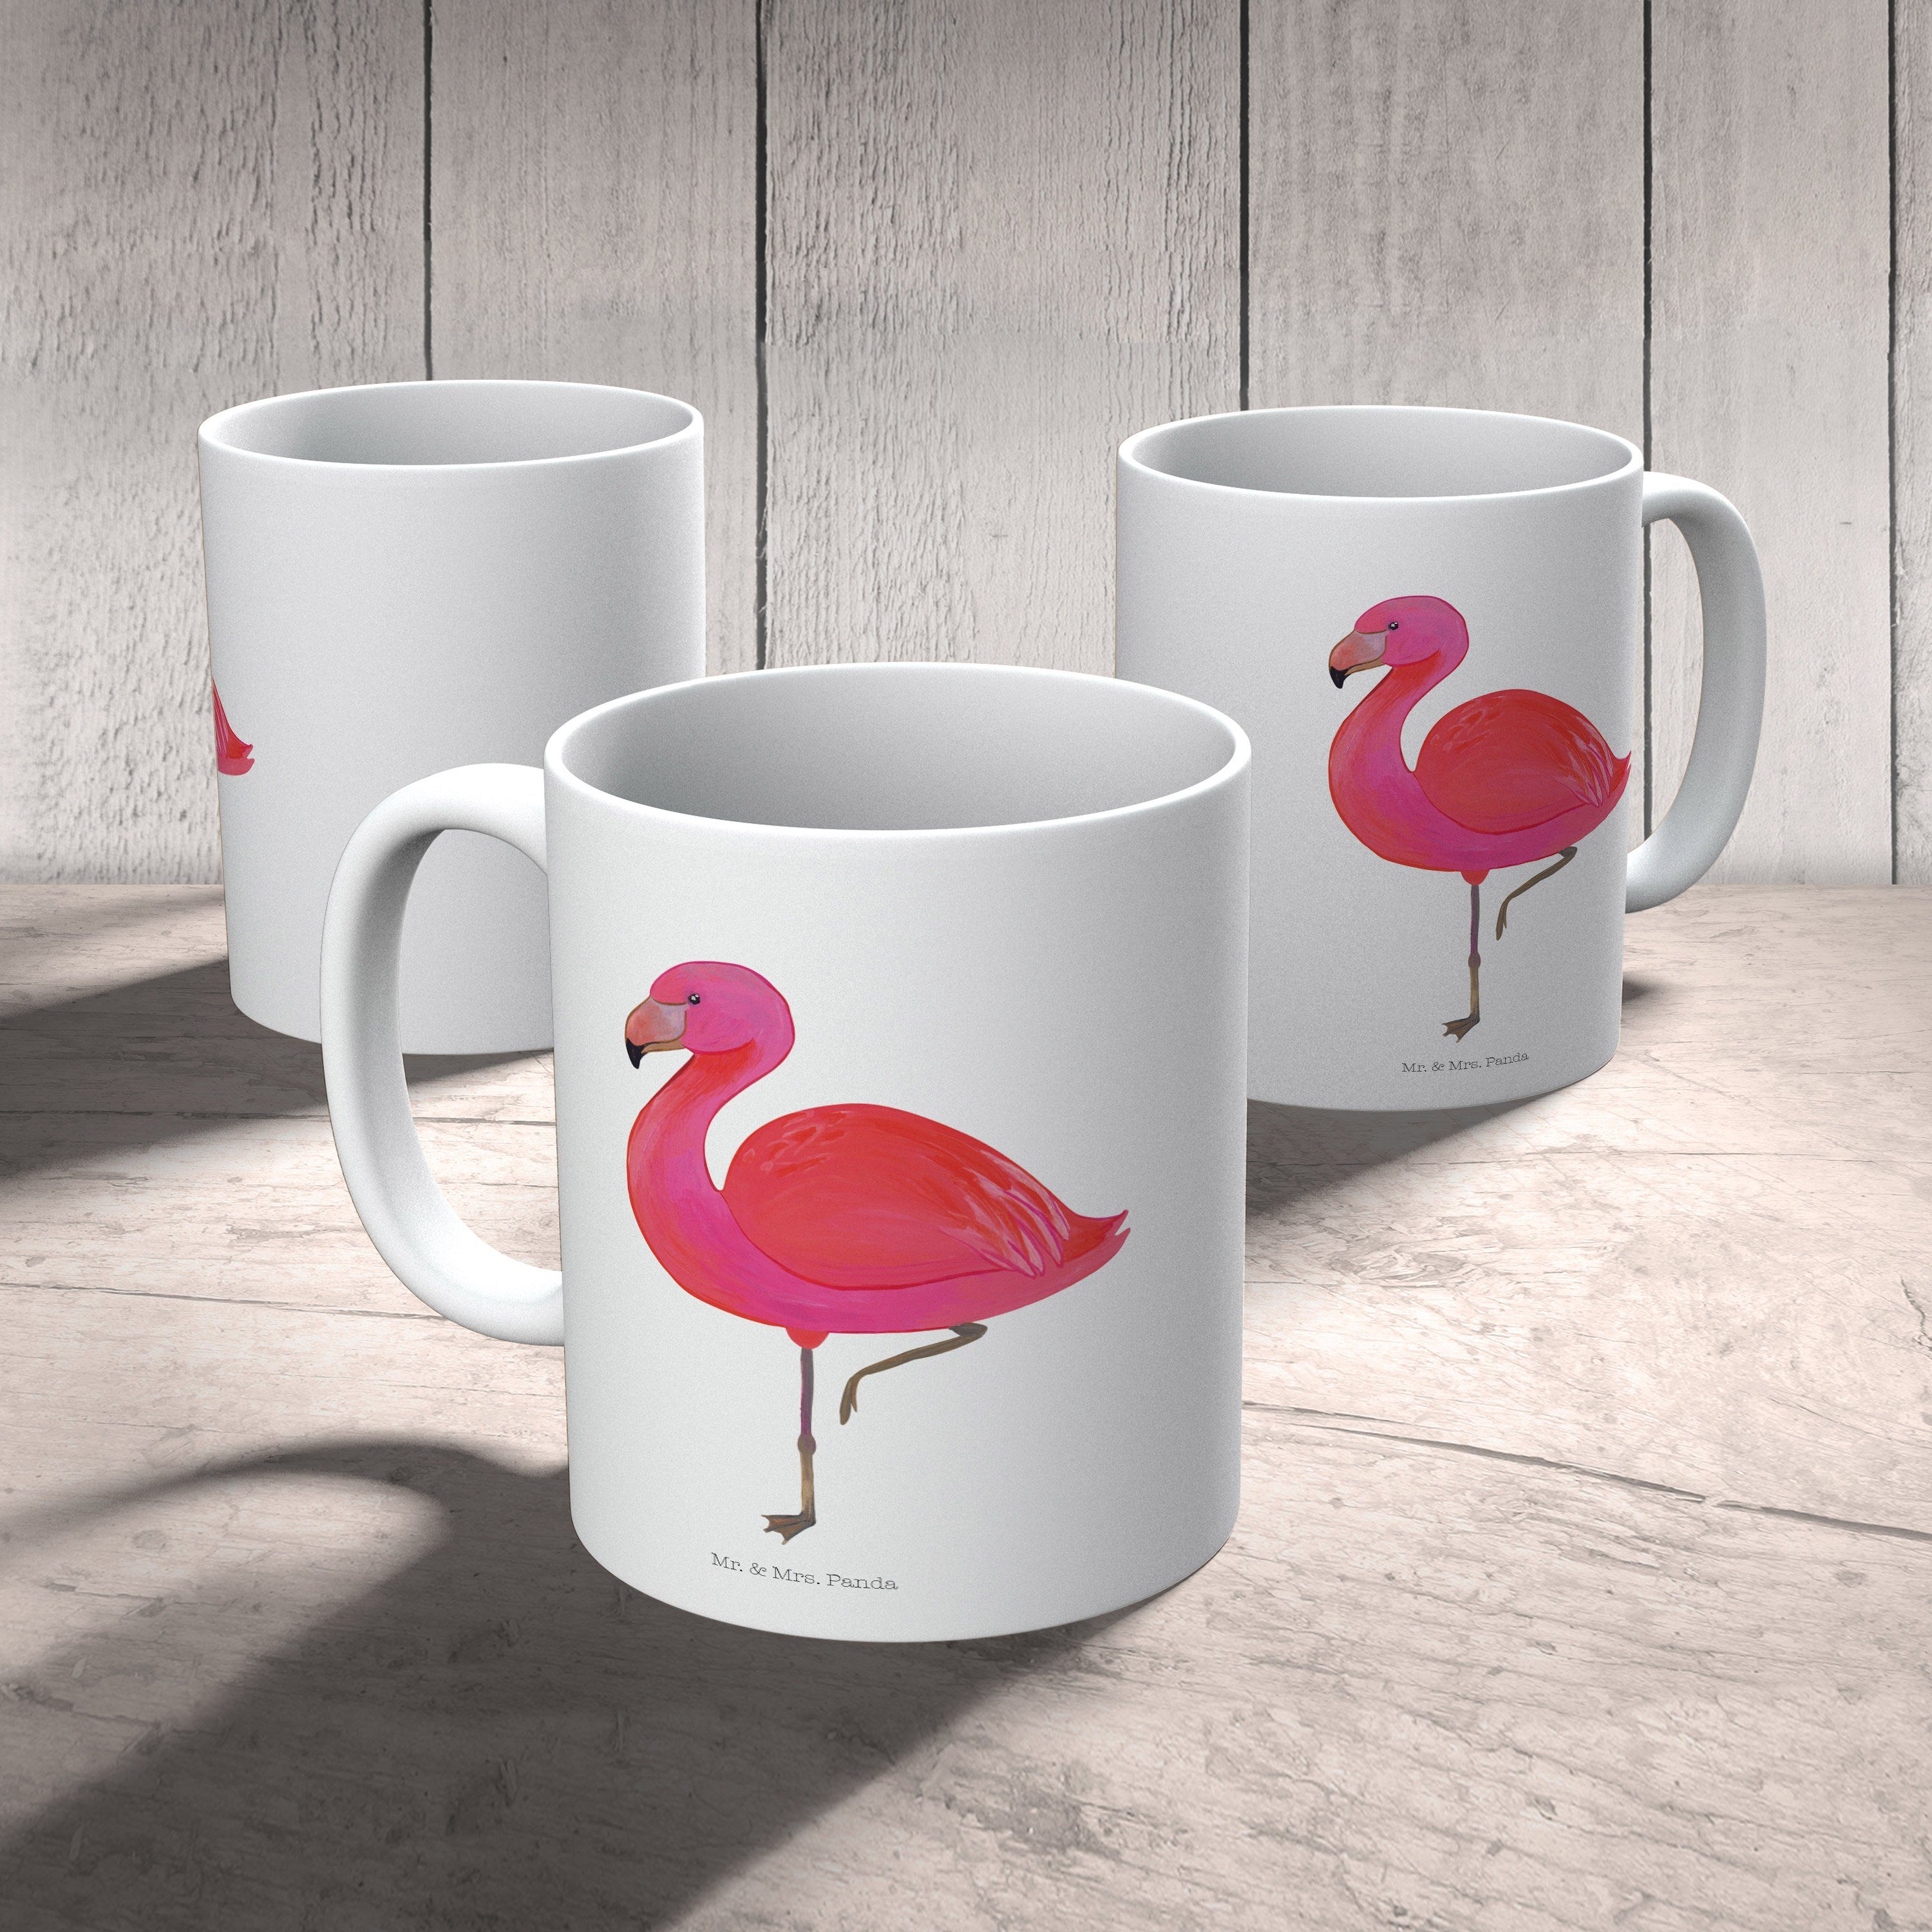 Mr. & Mrs. Panda Tasse rosa, Weiß classic Tasse, Motive, Tasse - Geschenk, Keramik - Kerami, Flamingo